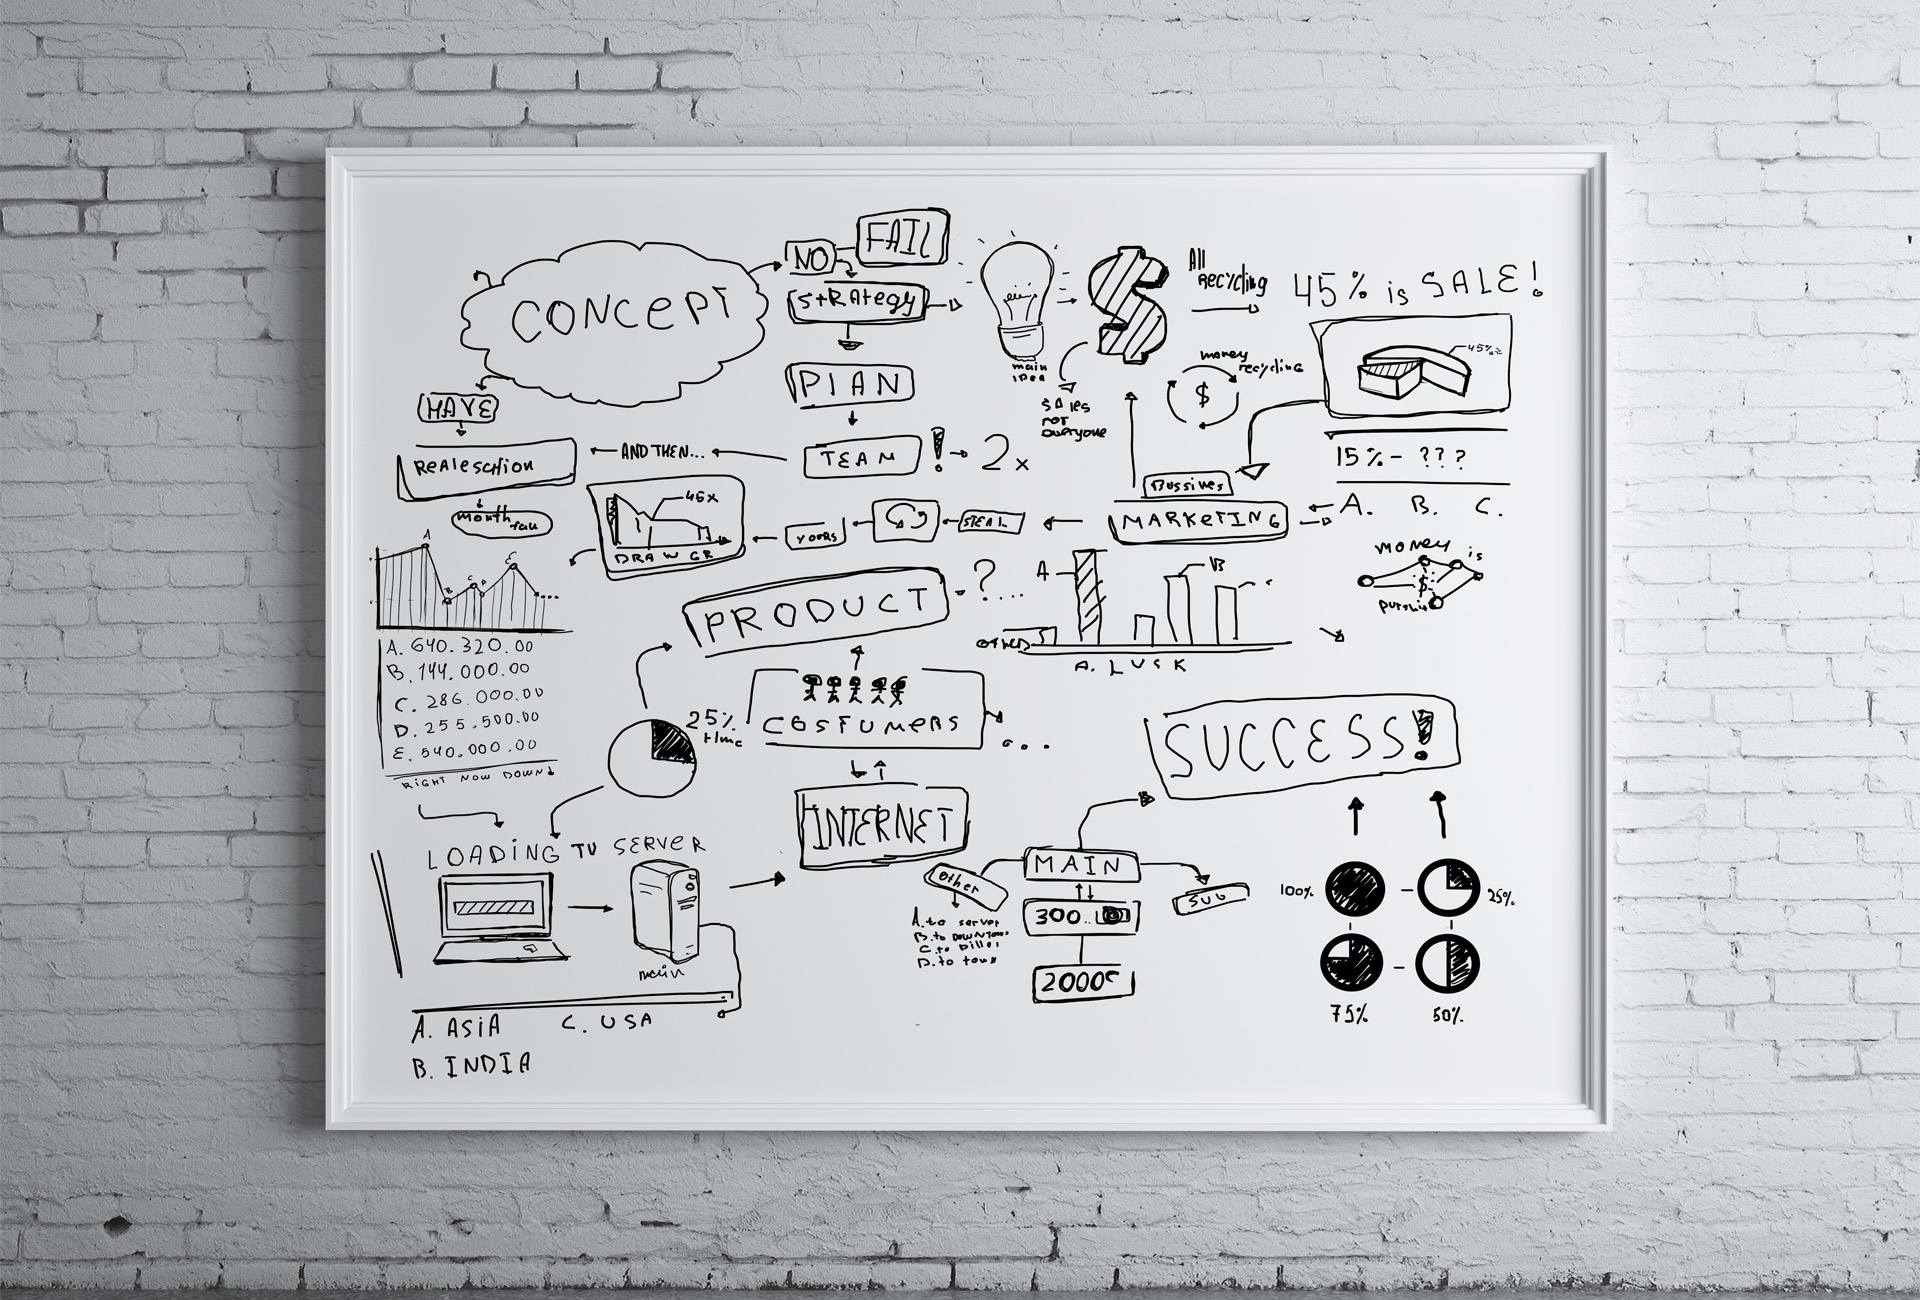 Digital Marketing Strategy on a whiteboard